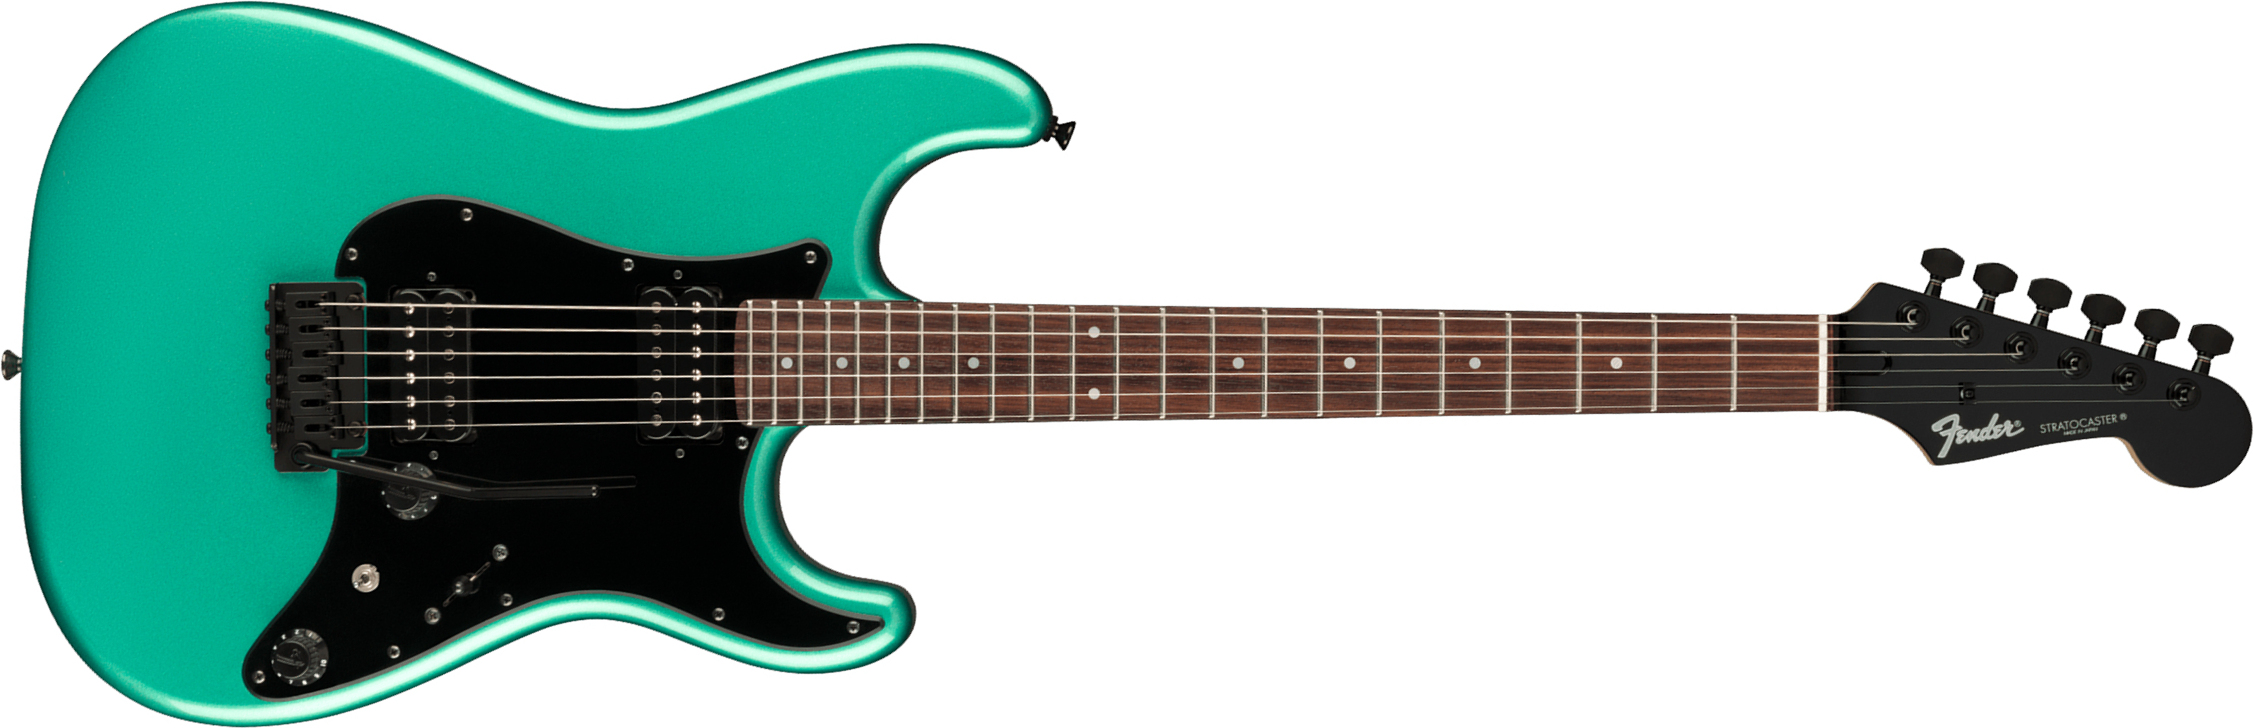 Fender Strat Boxer Hh Jap Trem Rw +housse - Sherwood Green Metallic - Str shape electric guitar - Main picture